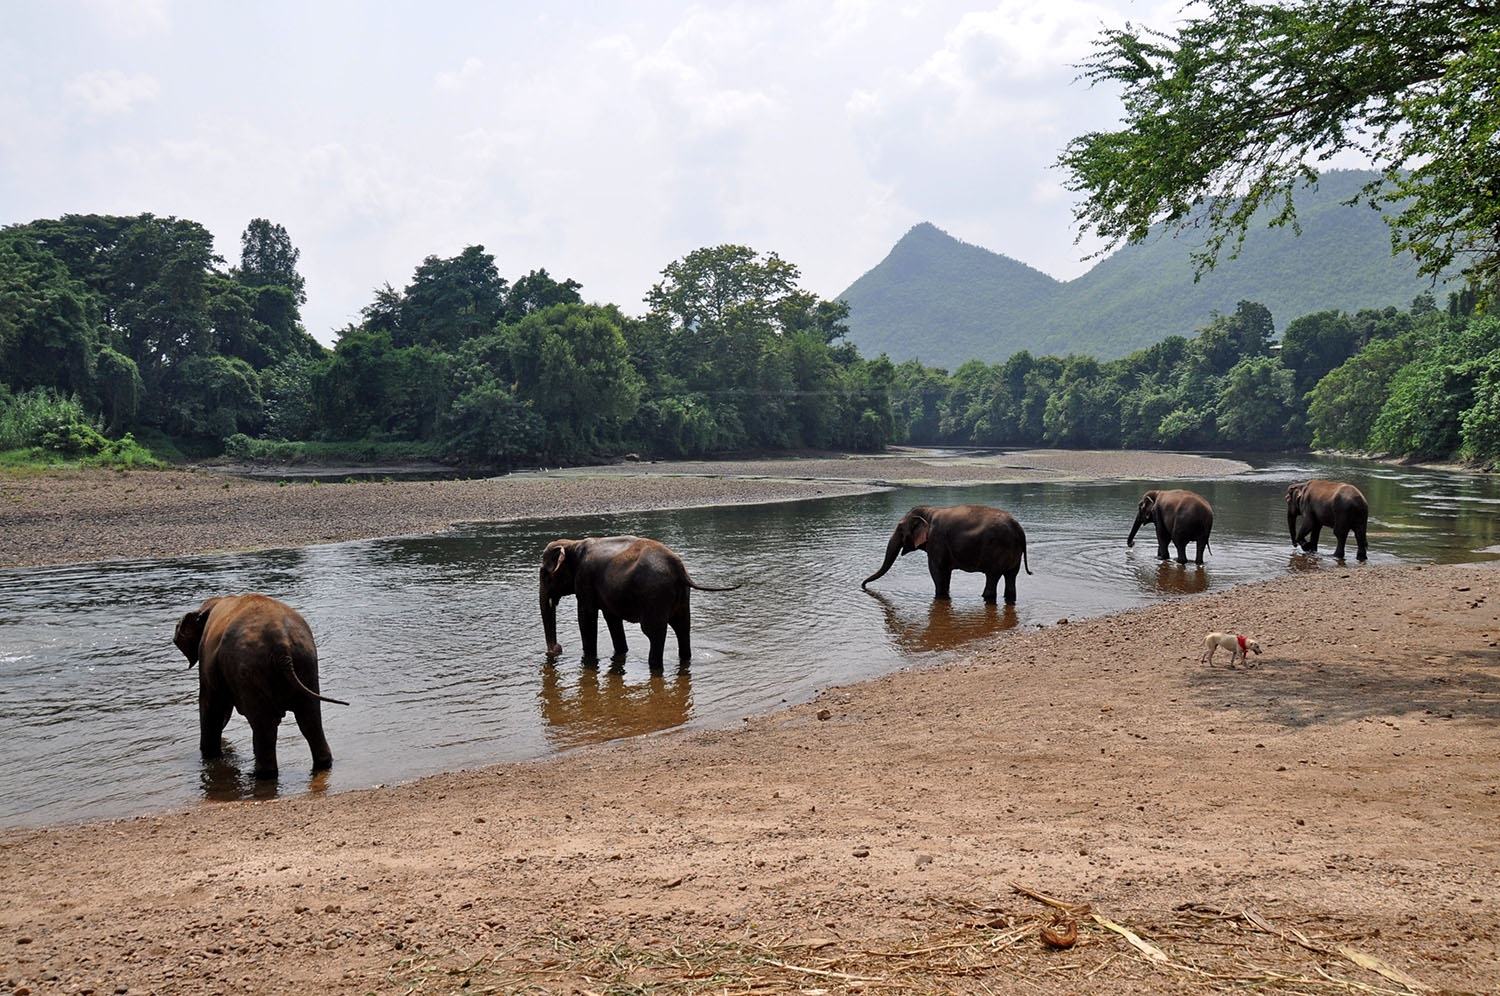 If you want to see elephants in Thailand, consider visiting an elephant rehabilitation center likeElephants WorldorElephant Nature Park .